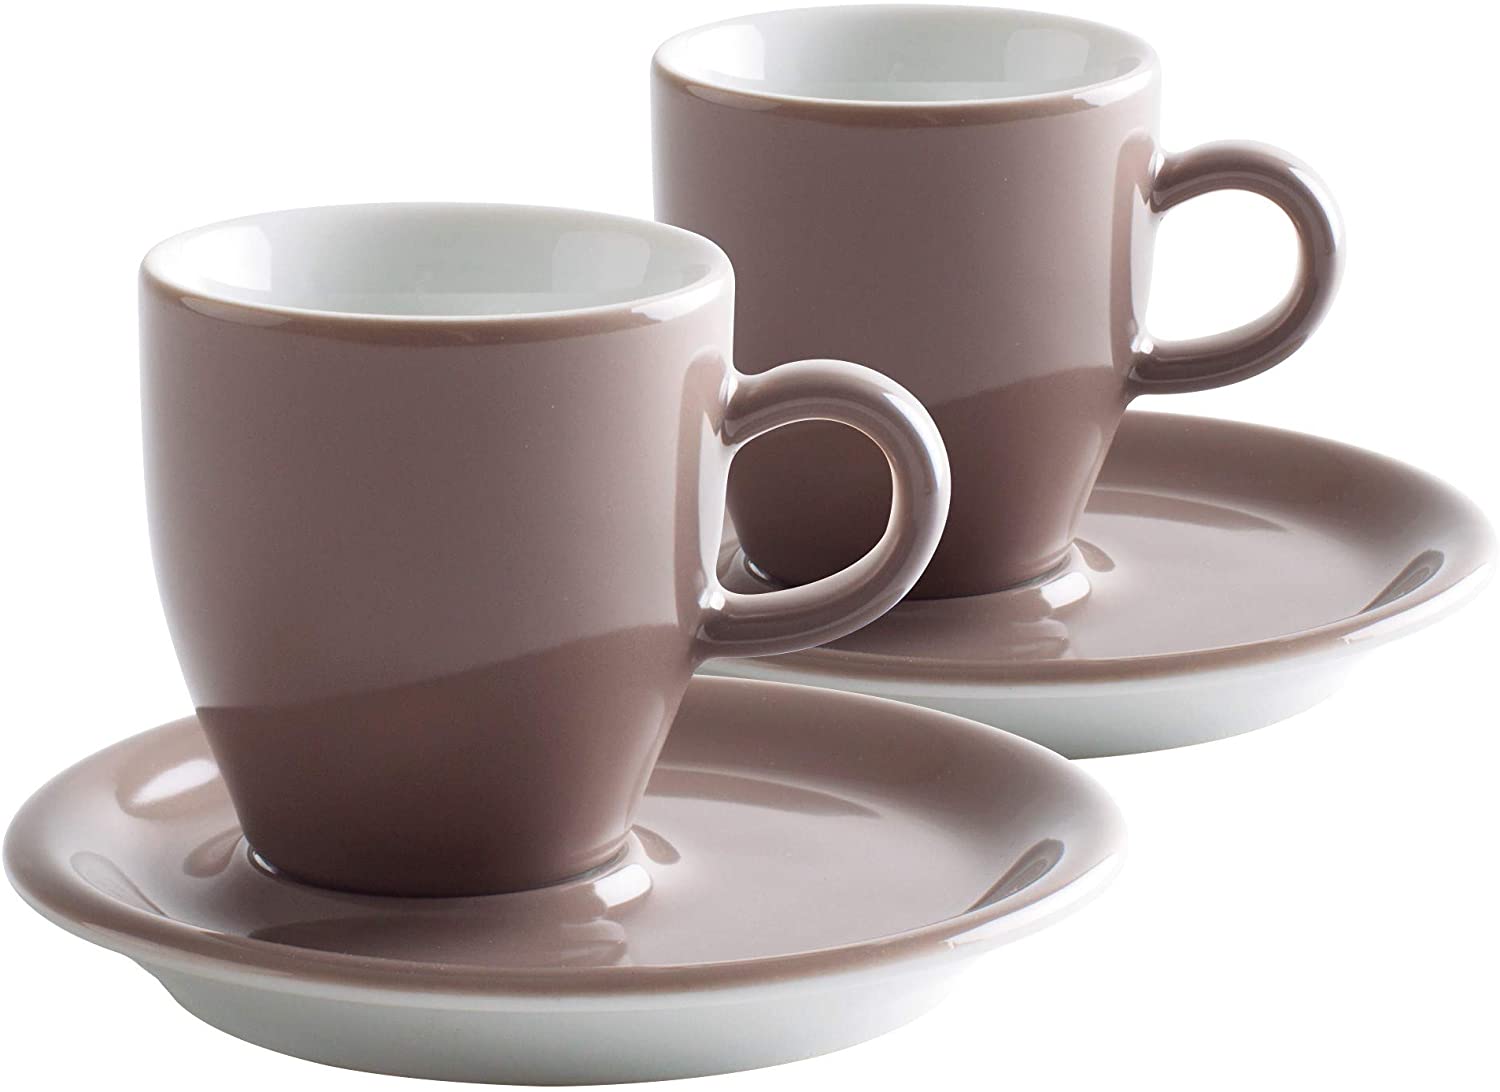 Kahla Café Sommelier Espresso Doppio, Set of 4, Coffee Mugs with Saucers, Porcelain, Taupe, 50ml, 21